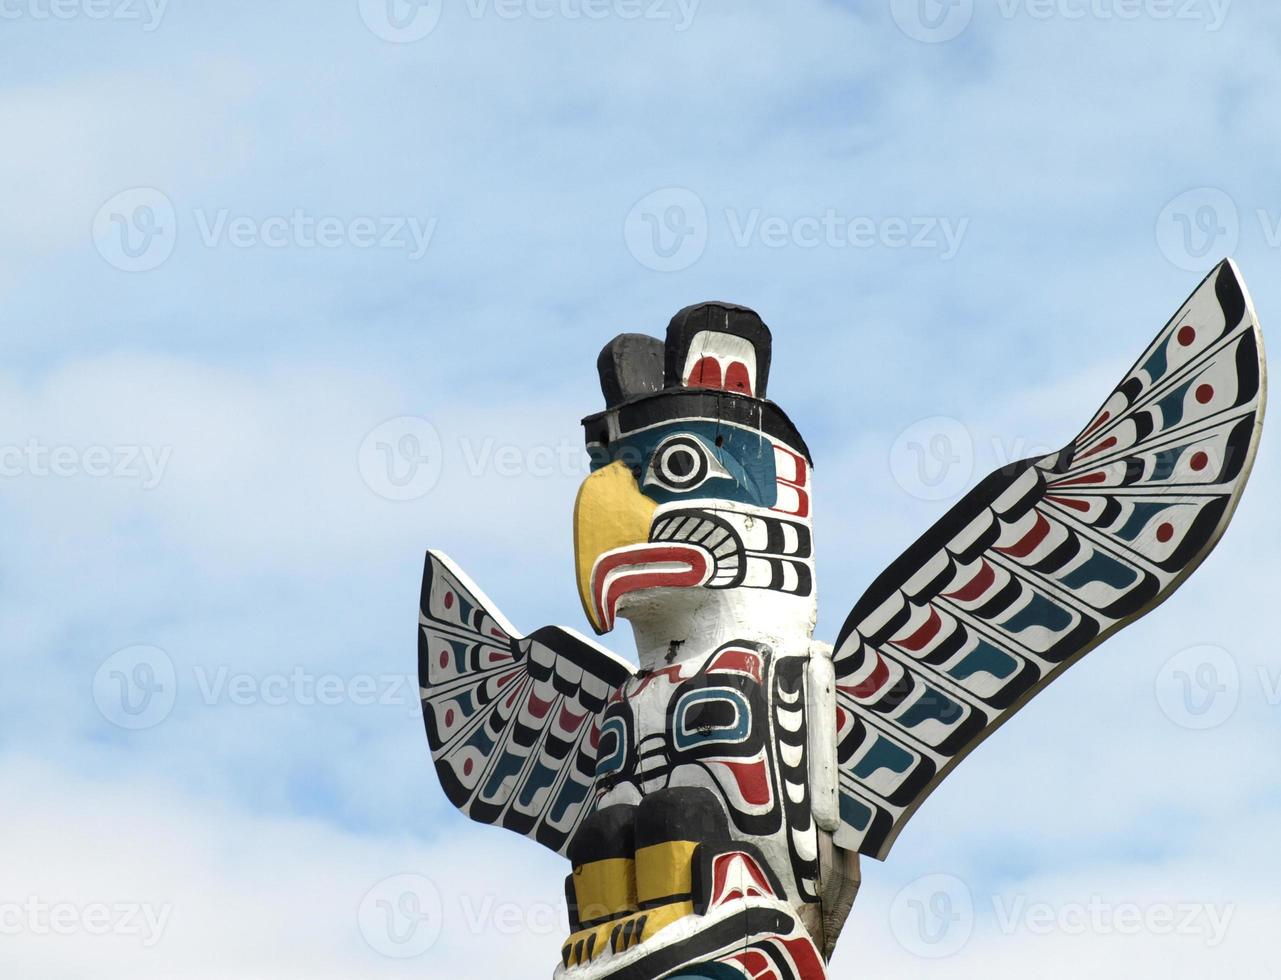 North American Totem Pole photo